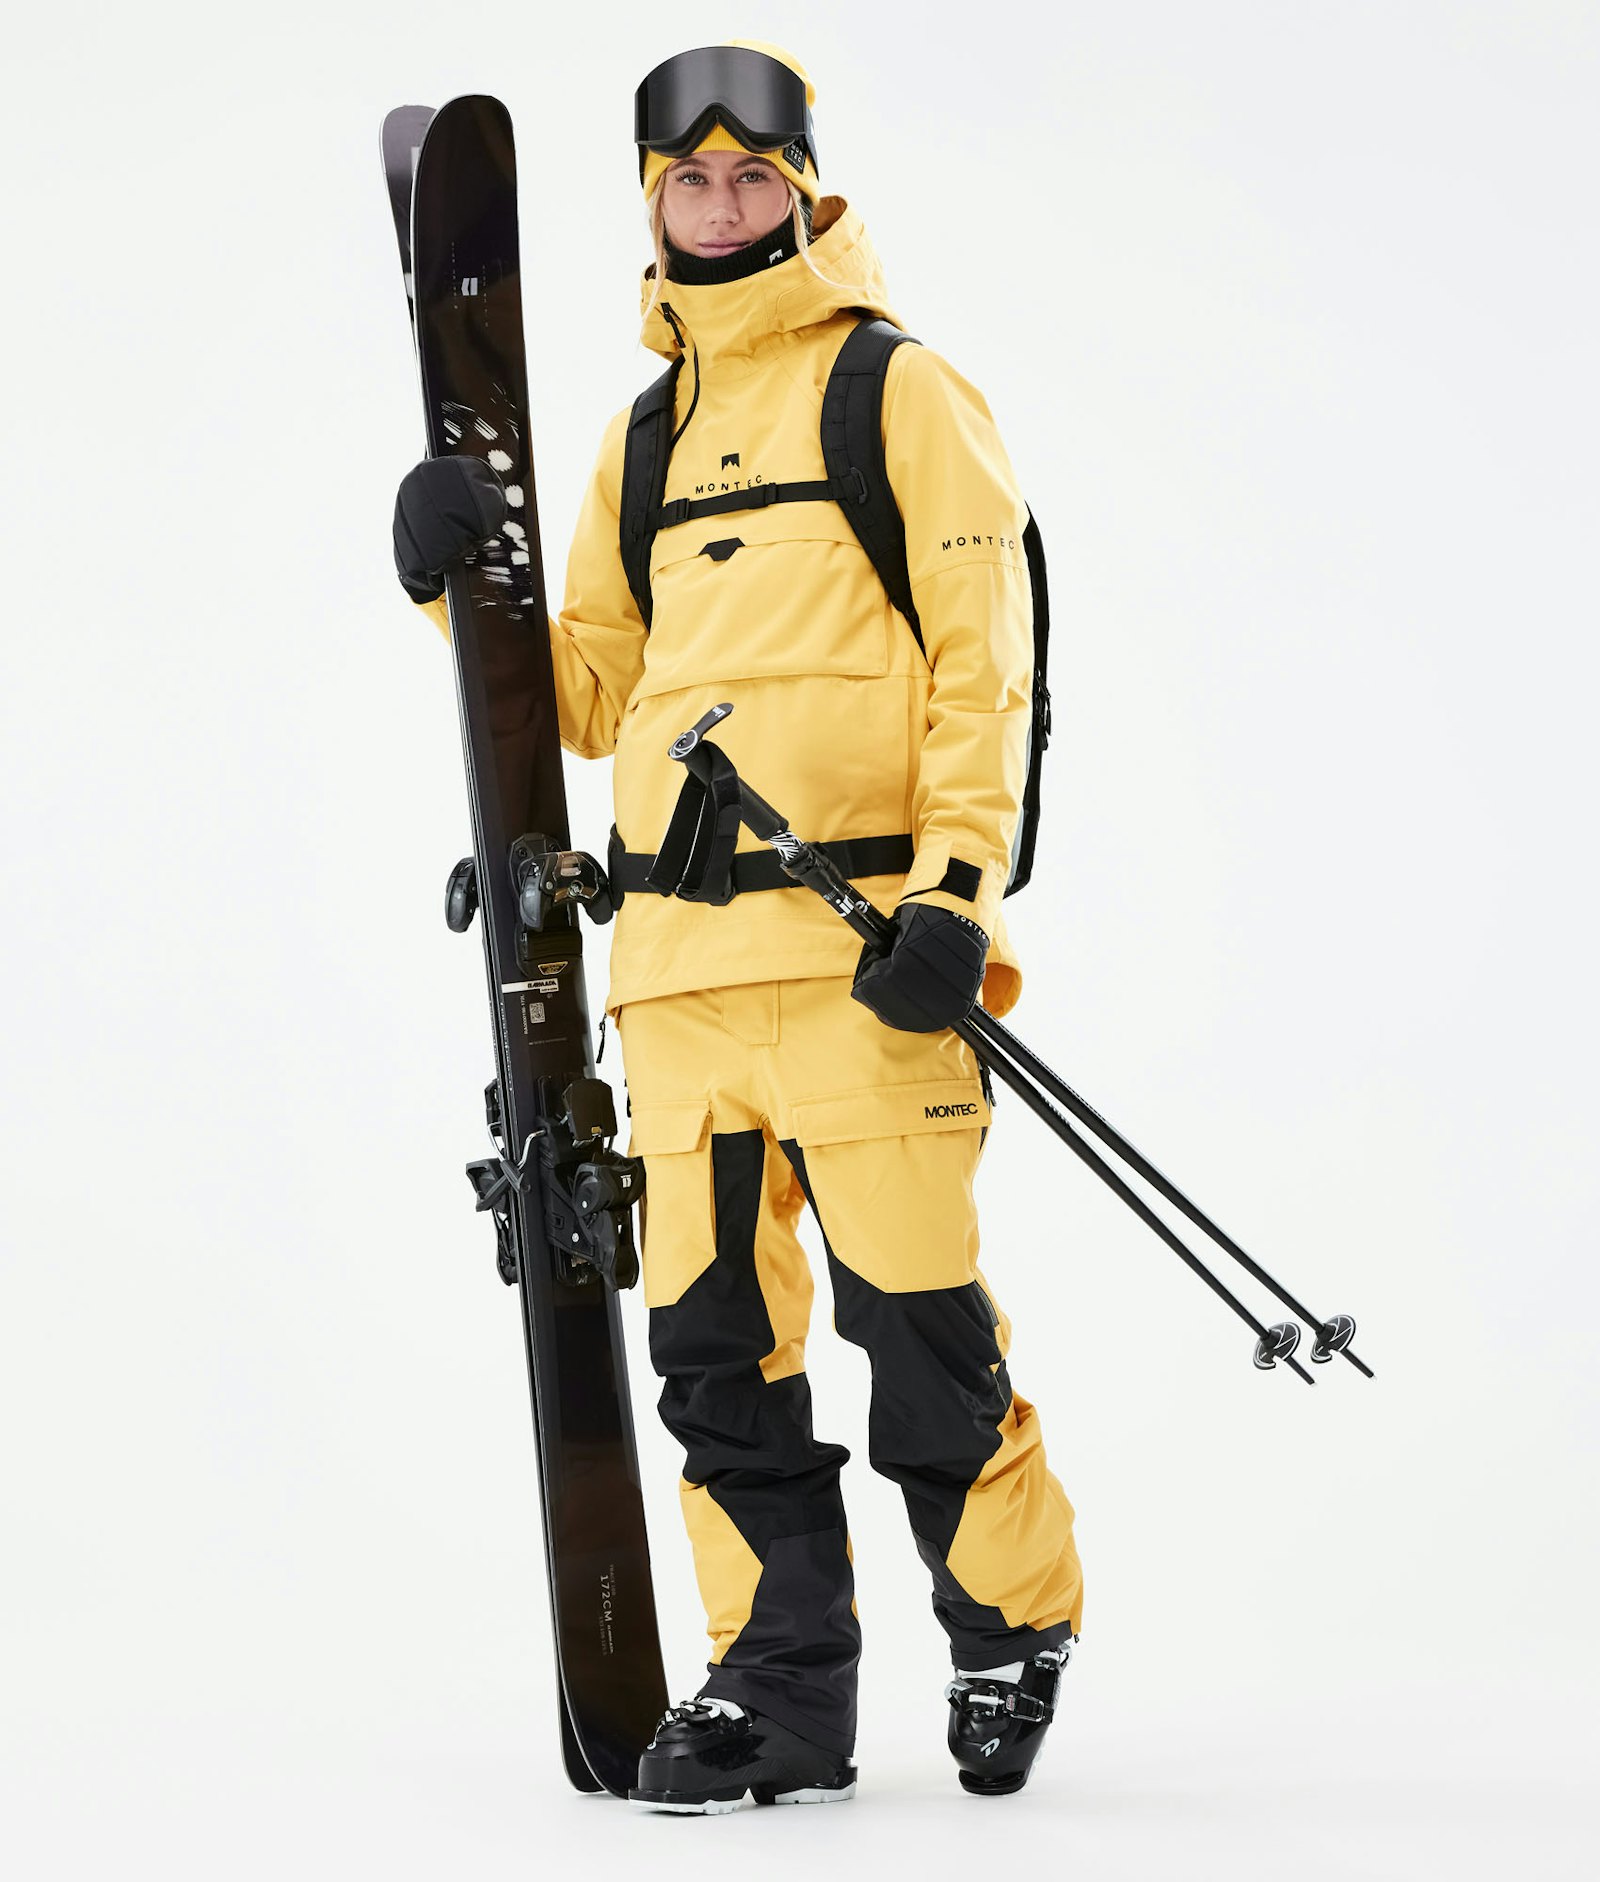 Peak Performance Vertical Pro (2021) - Is this the best ski jacket